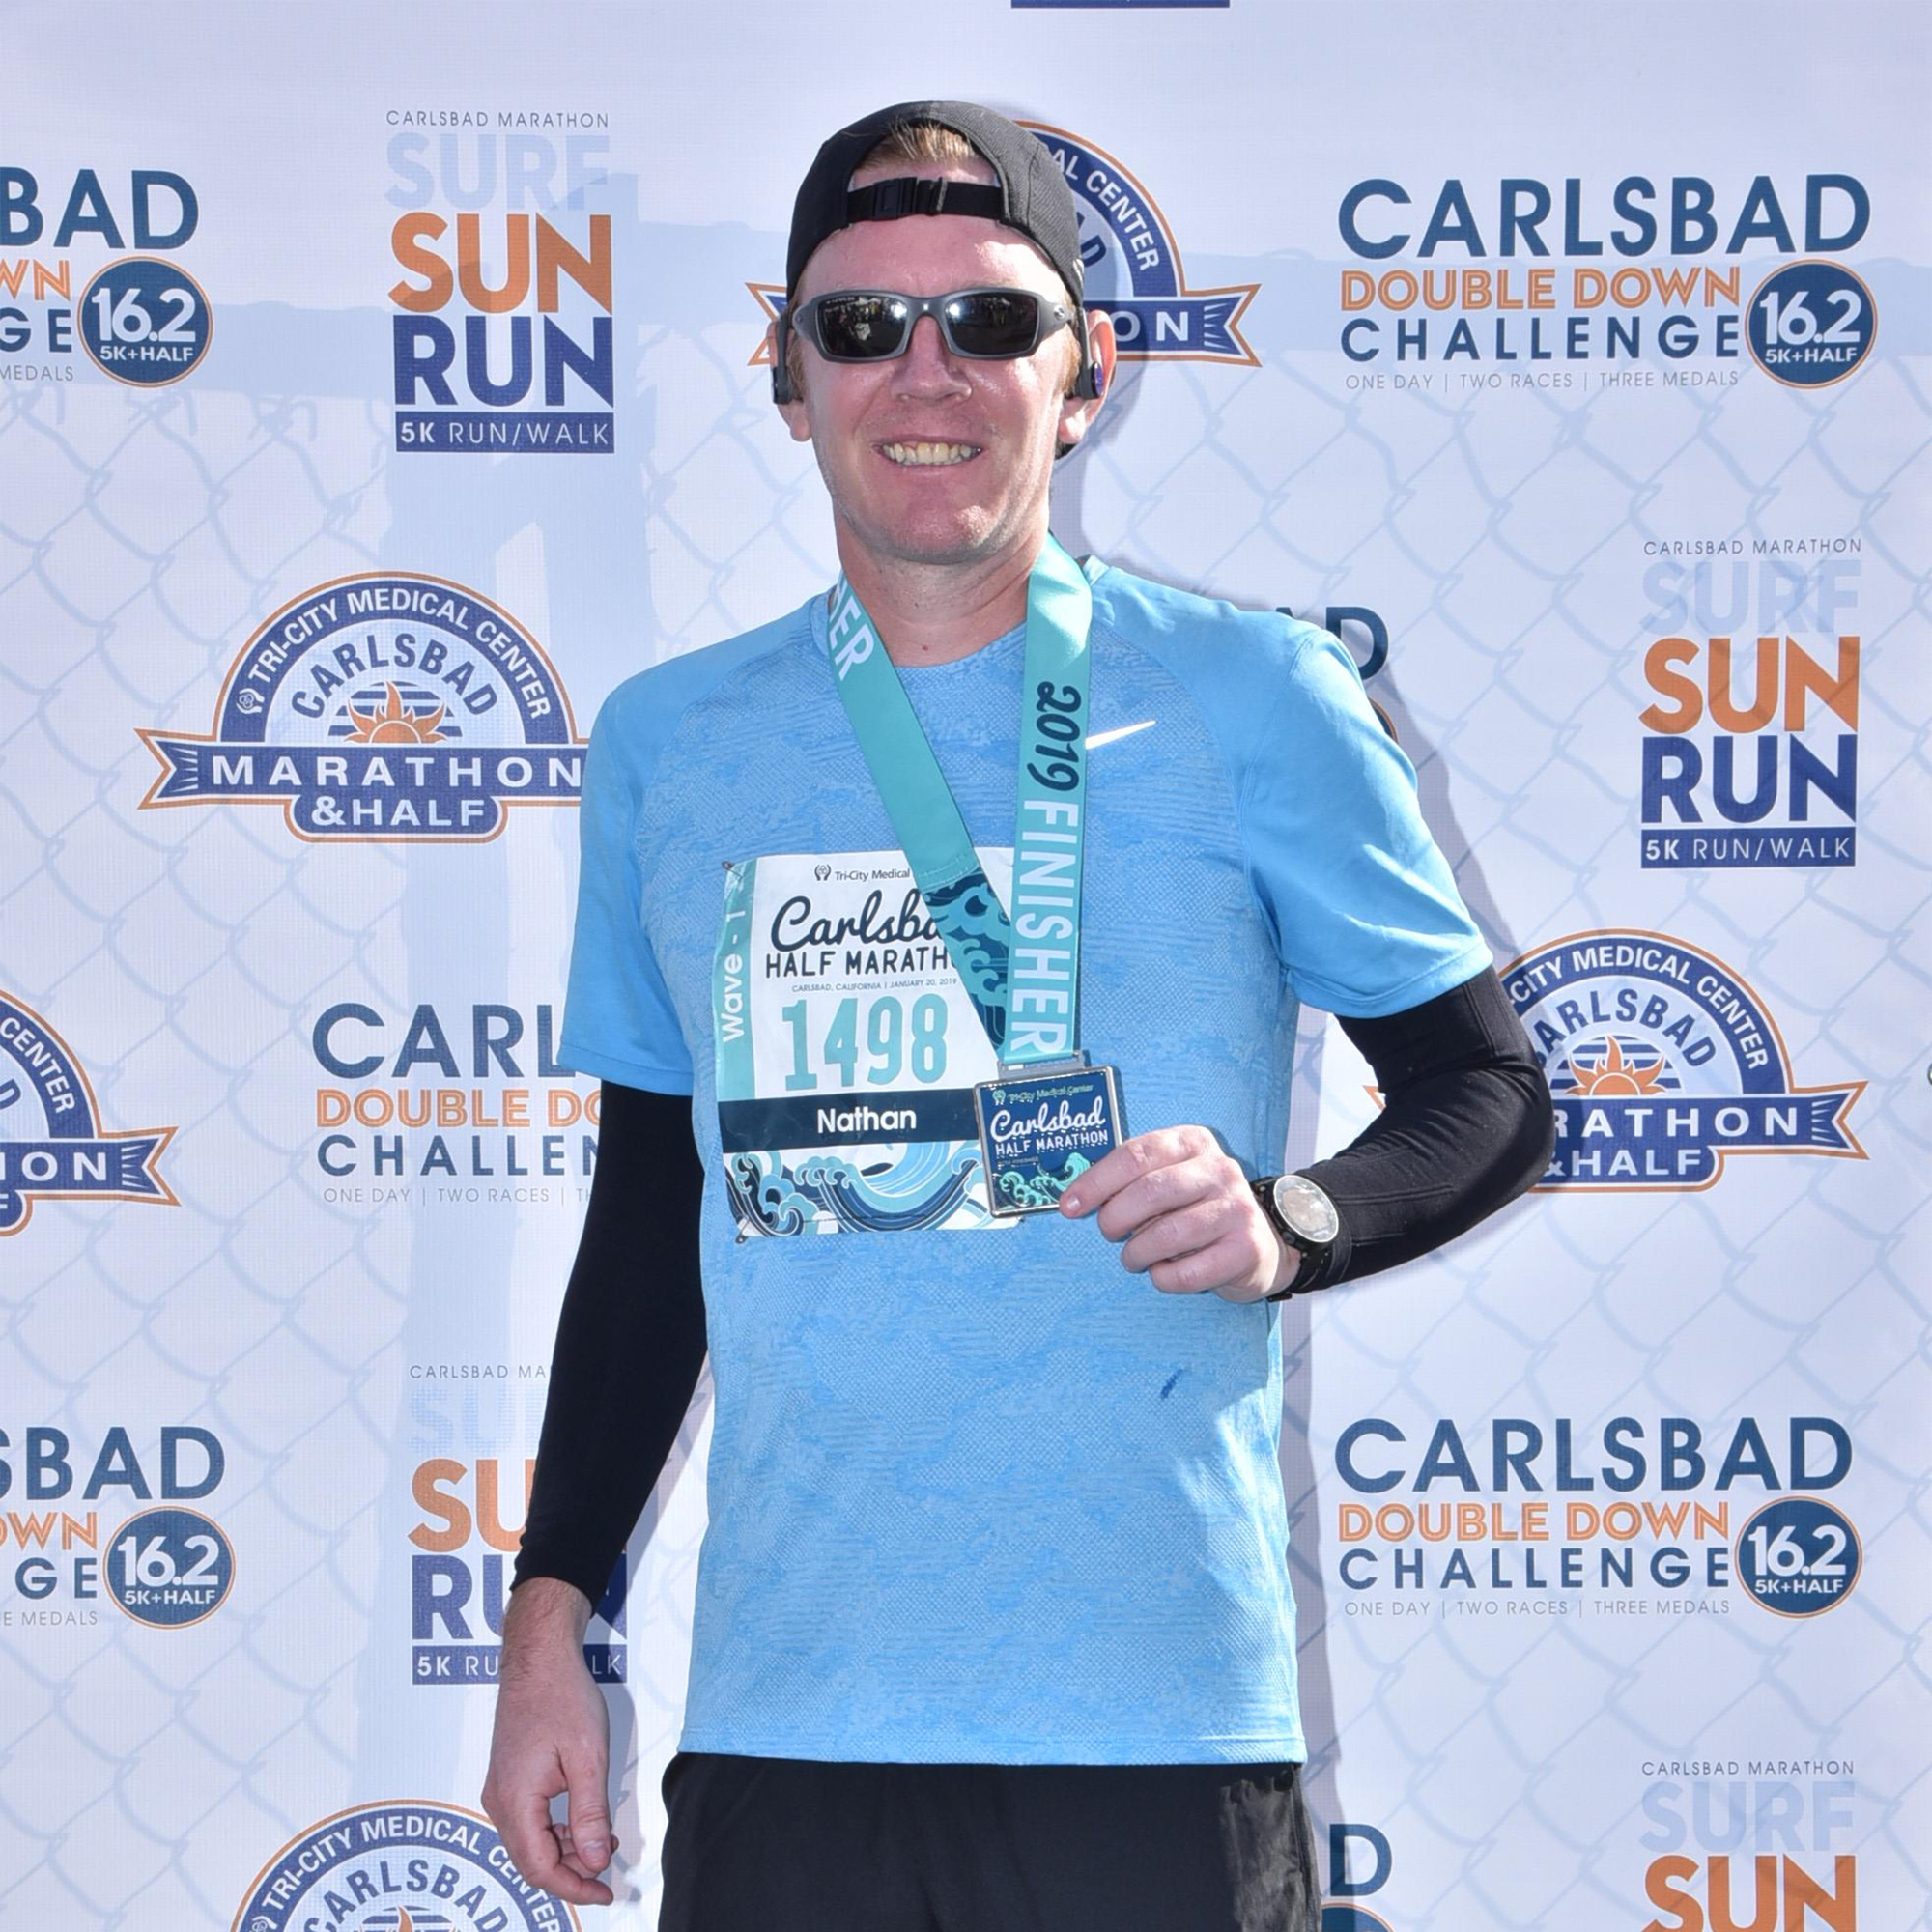 carlsbad marathon 2019 n8i - Race Review: Carlsbad Marathon 2019